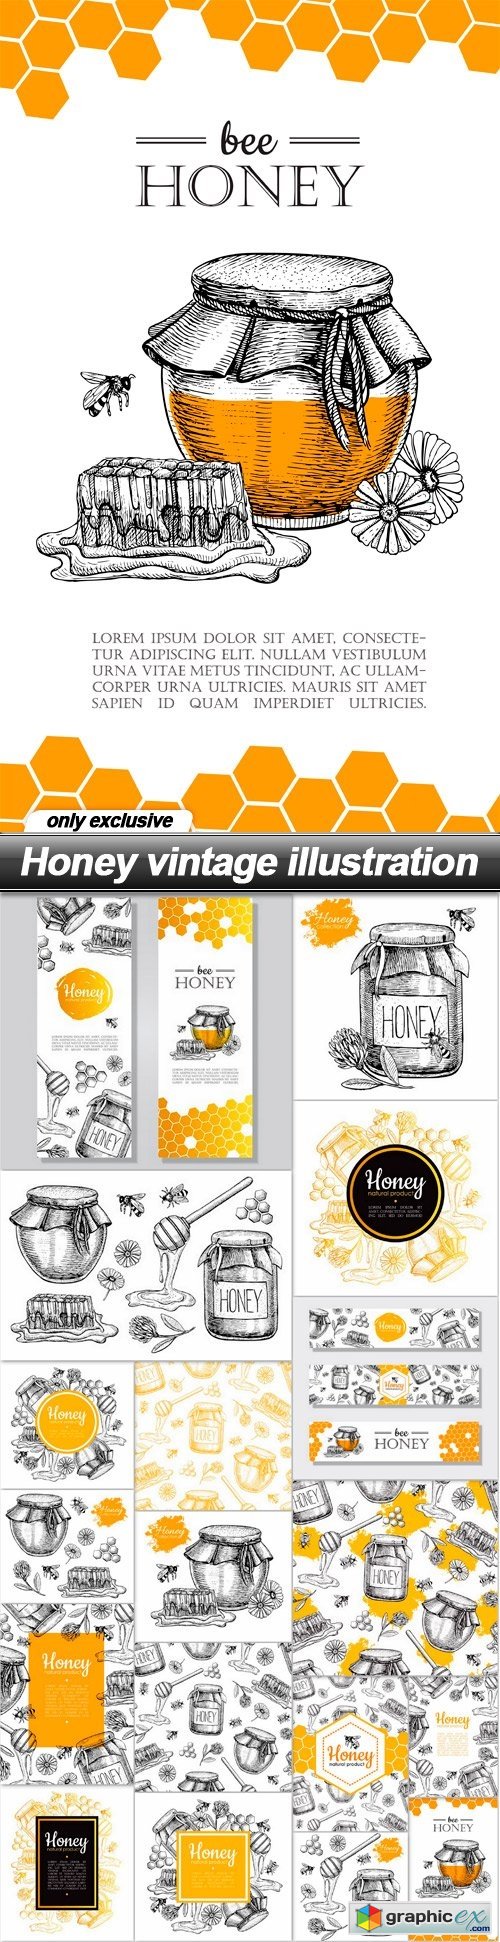 Honey vintage illustration - 18 EPS